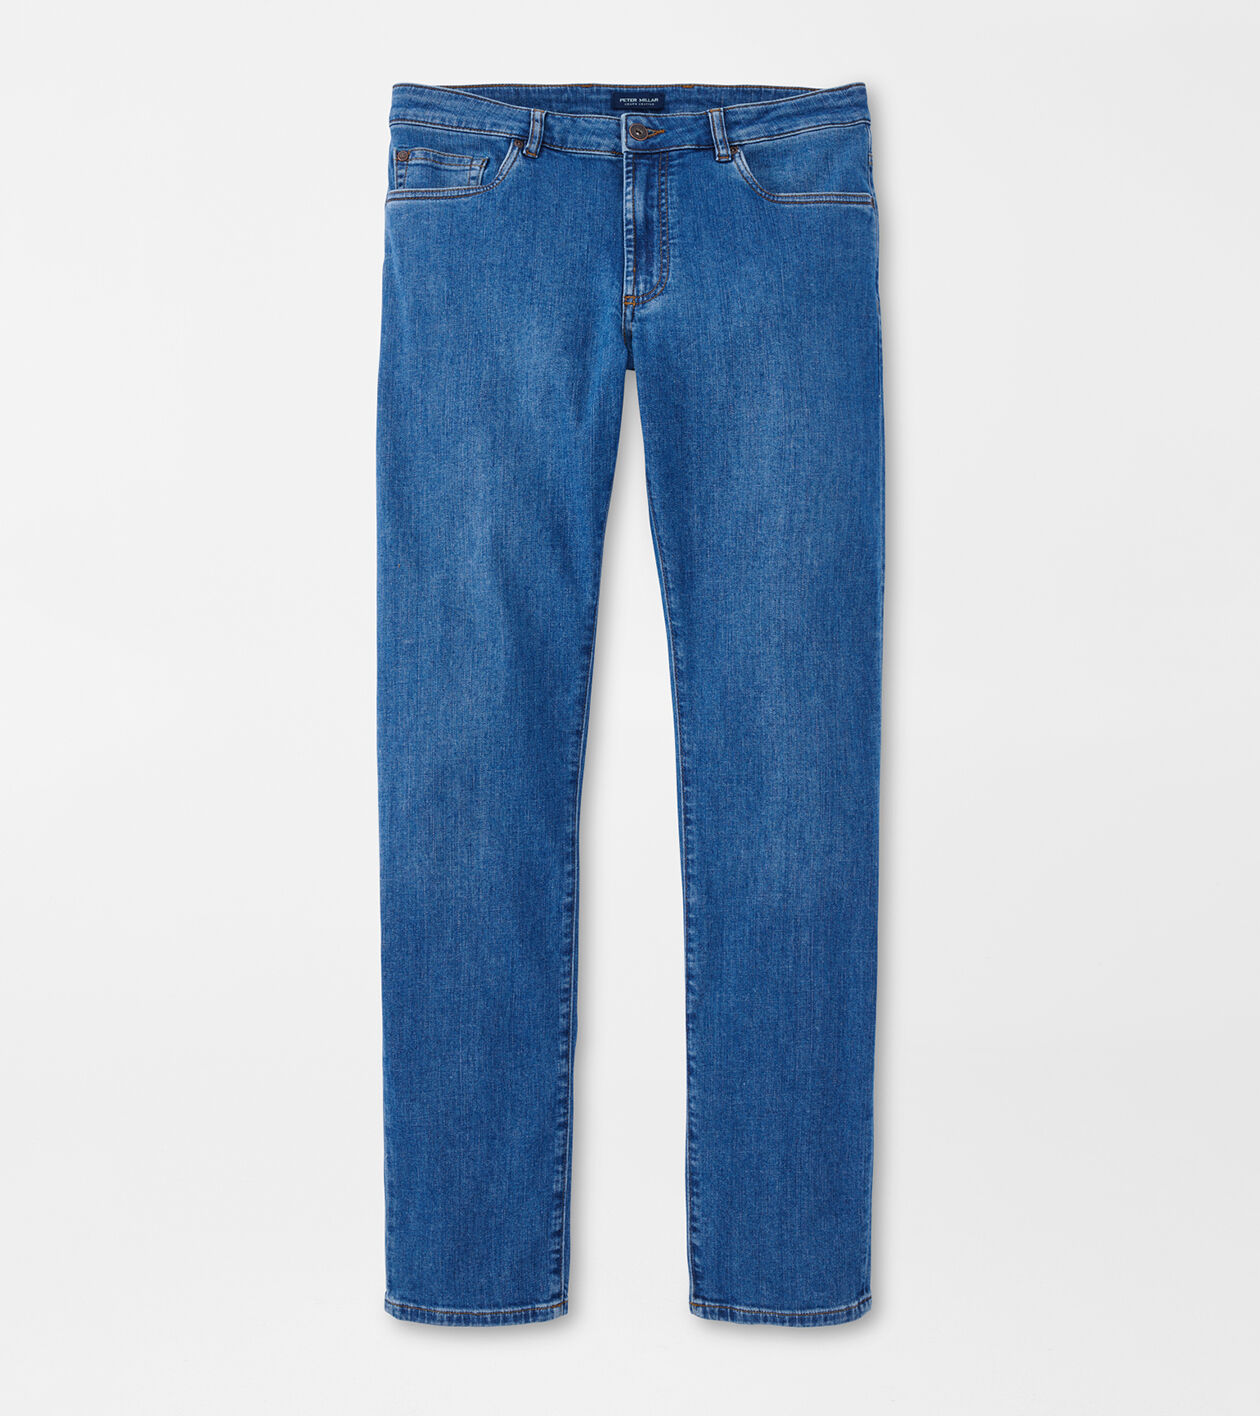 Blue XL Jack & Jones shorts jeans MEN FASHION Jeans Worn-in discount 57% 